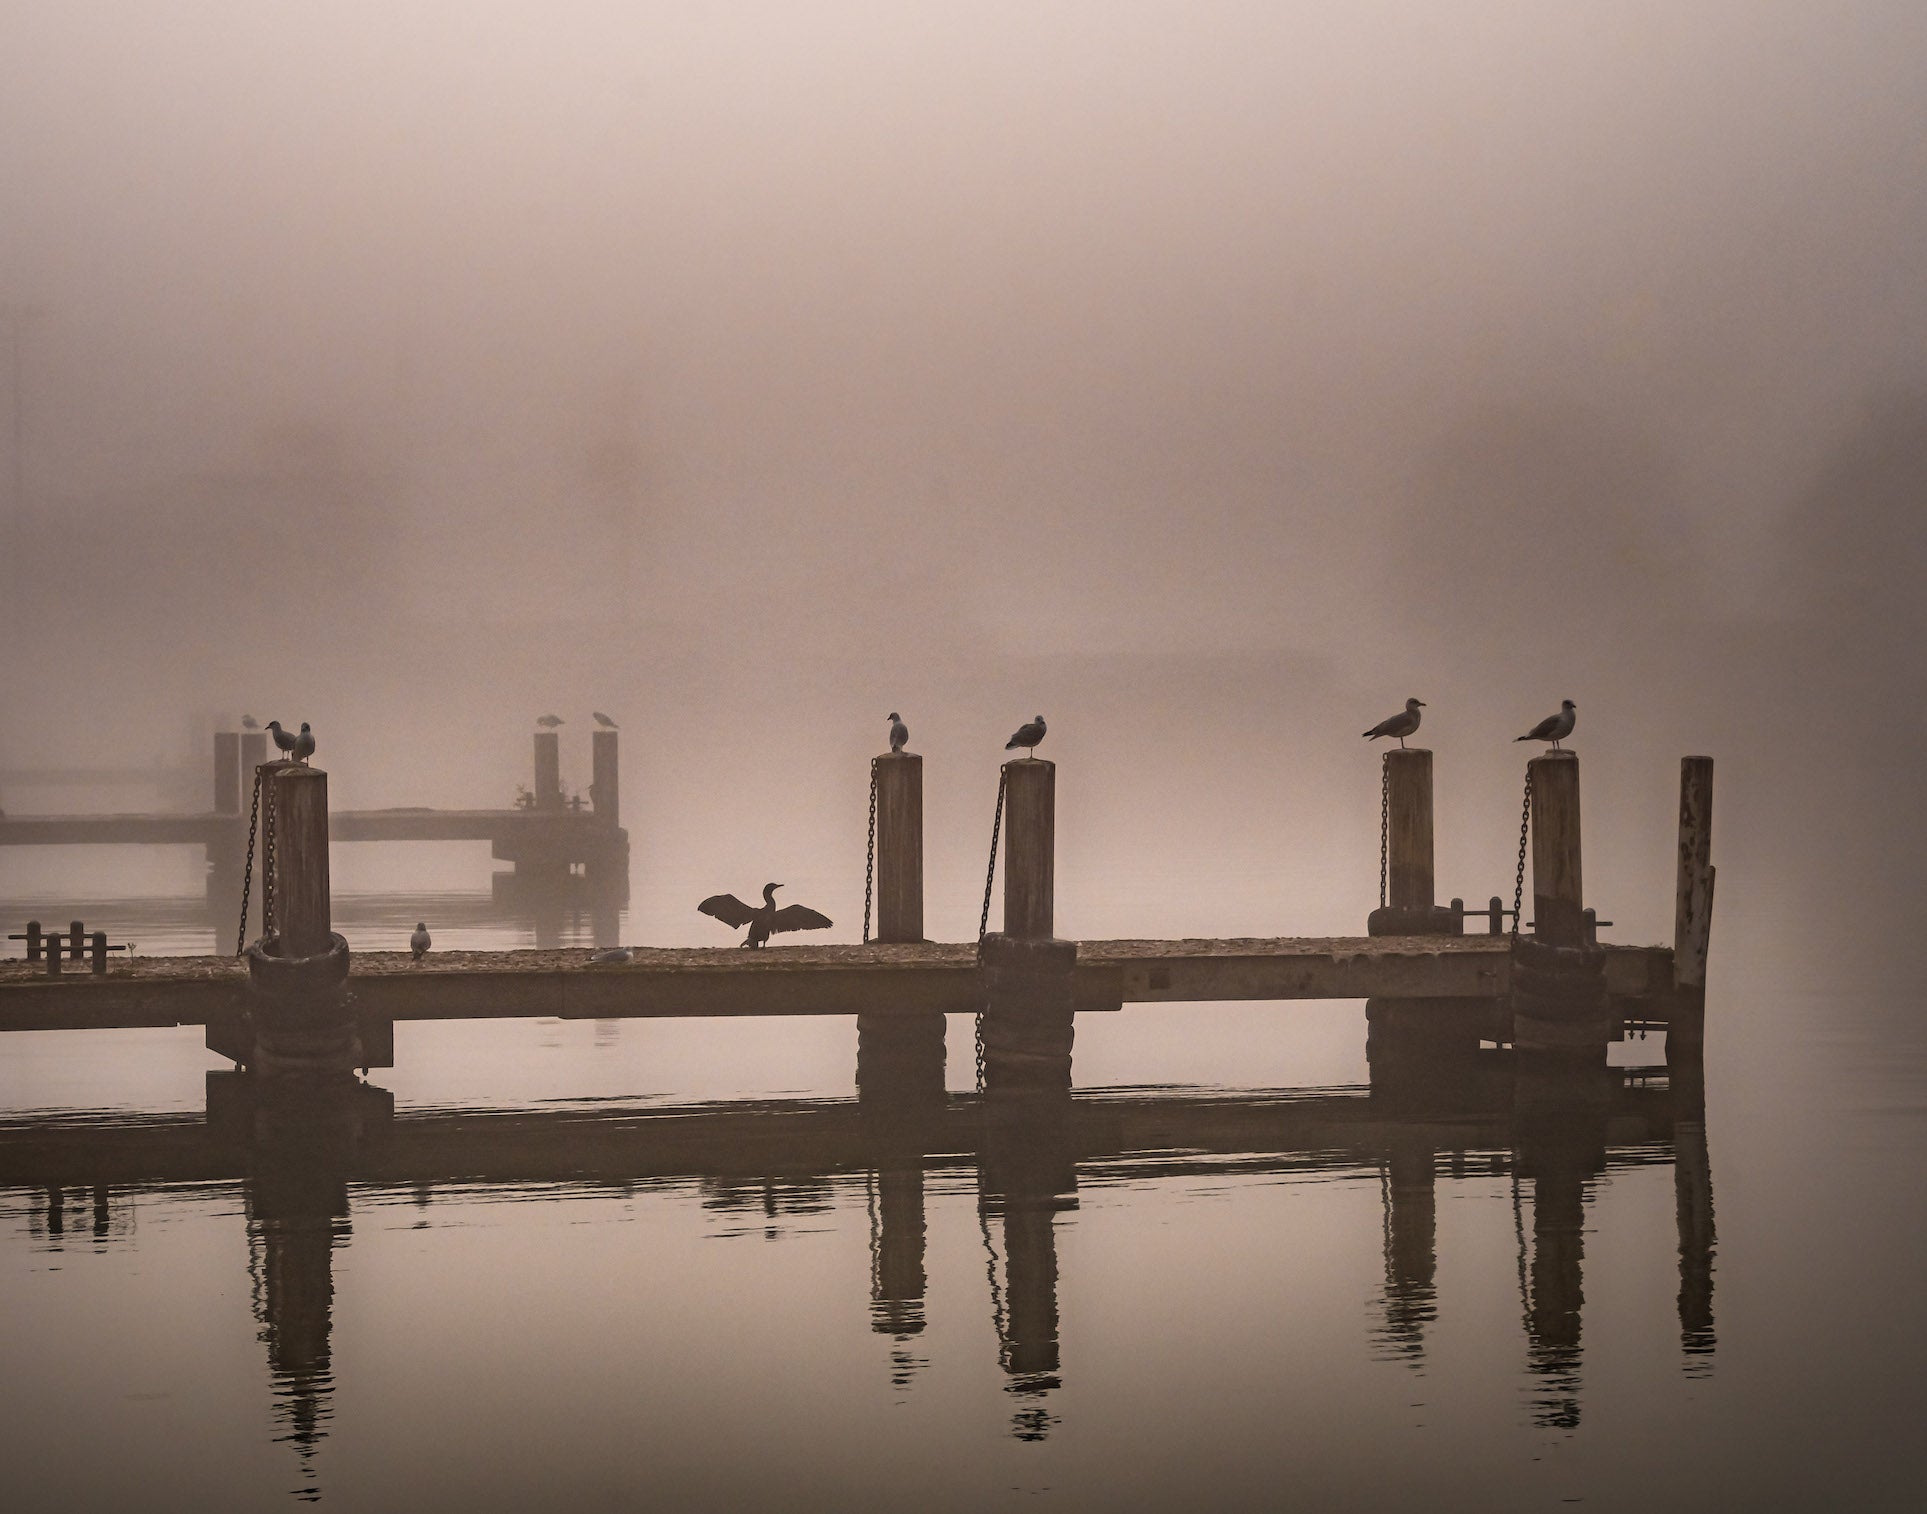 Misty Dock